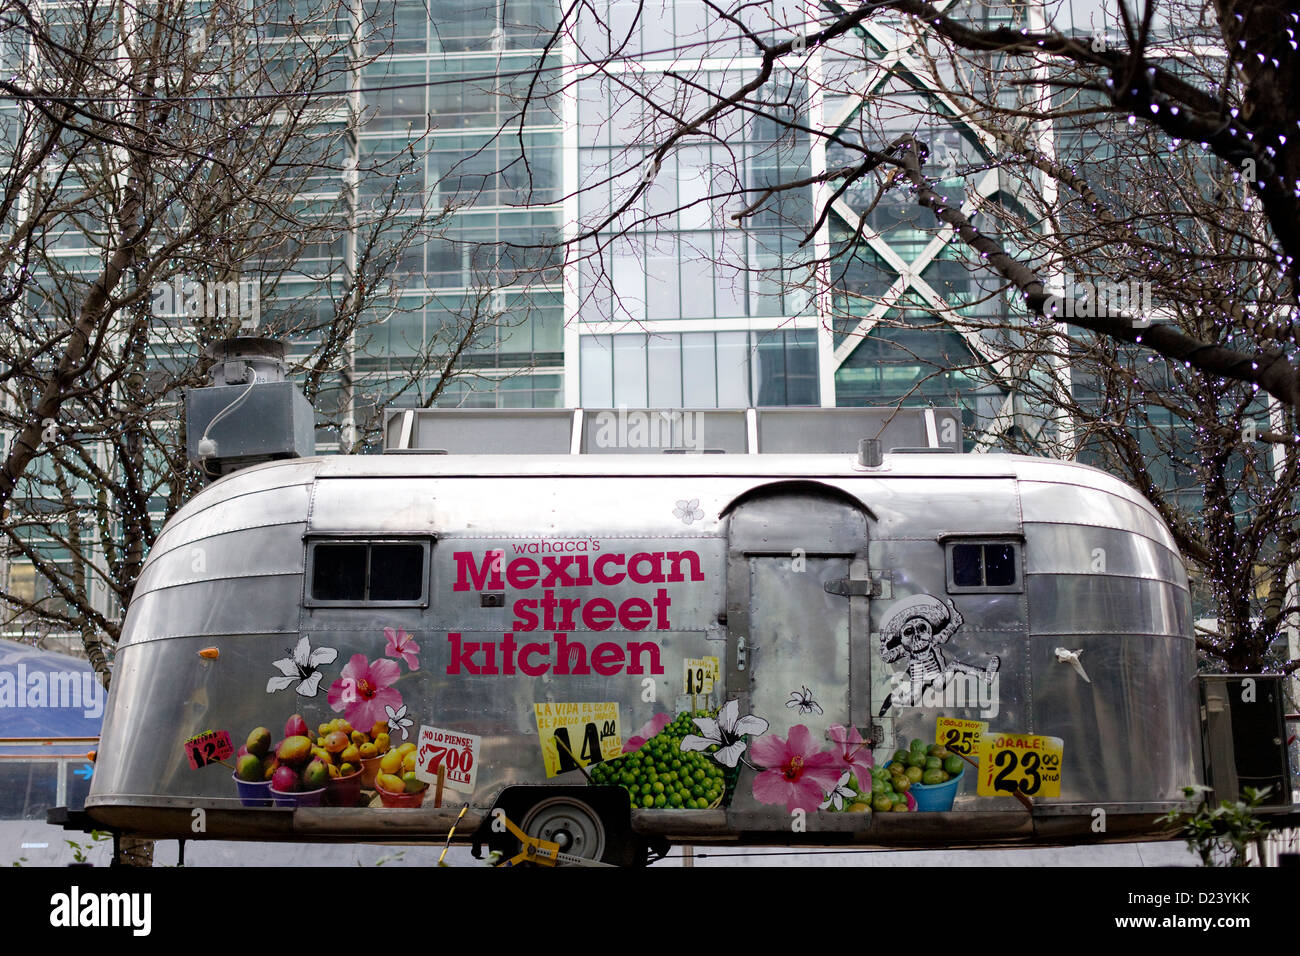 Mexican street kitchen bus Air stream trailer Stock Photo